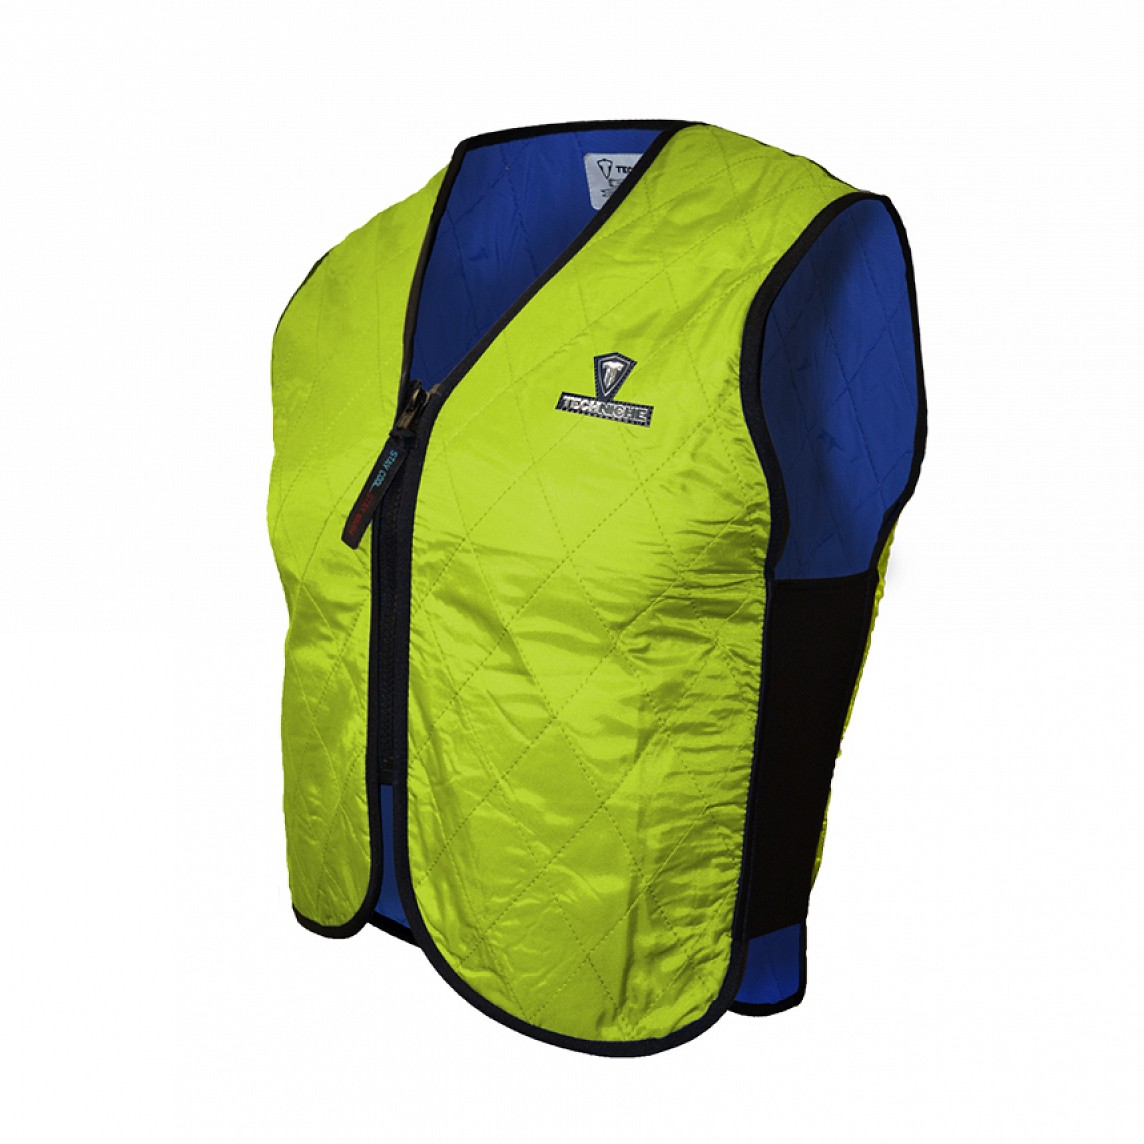 Bodycool Xtreme Evaporative Cooling Vest